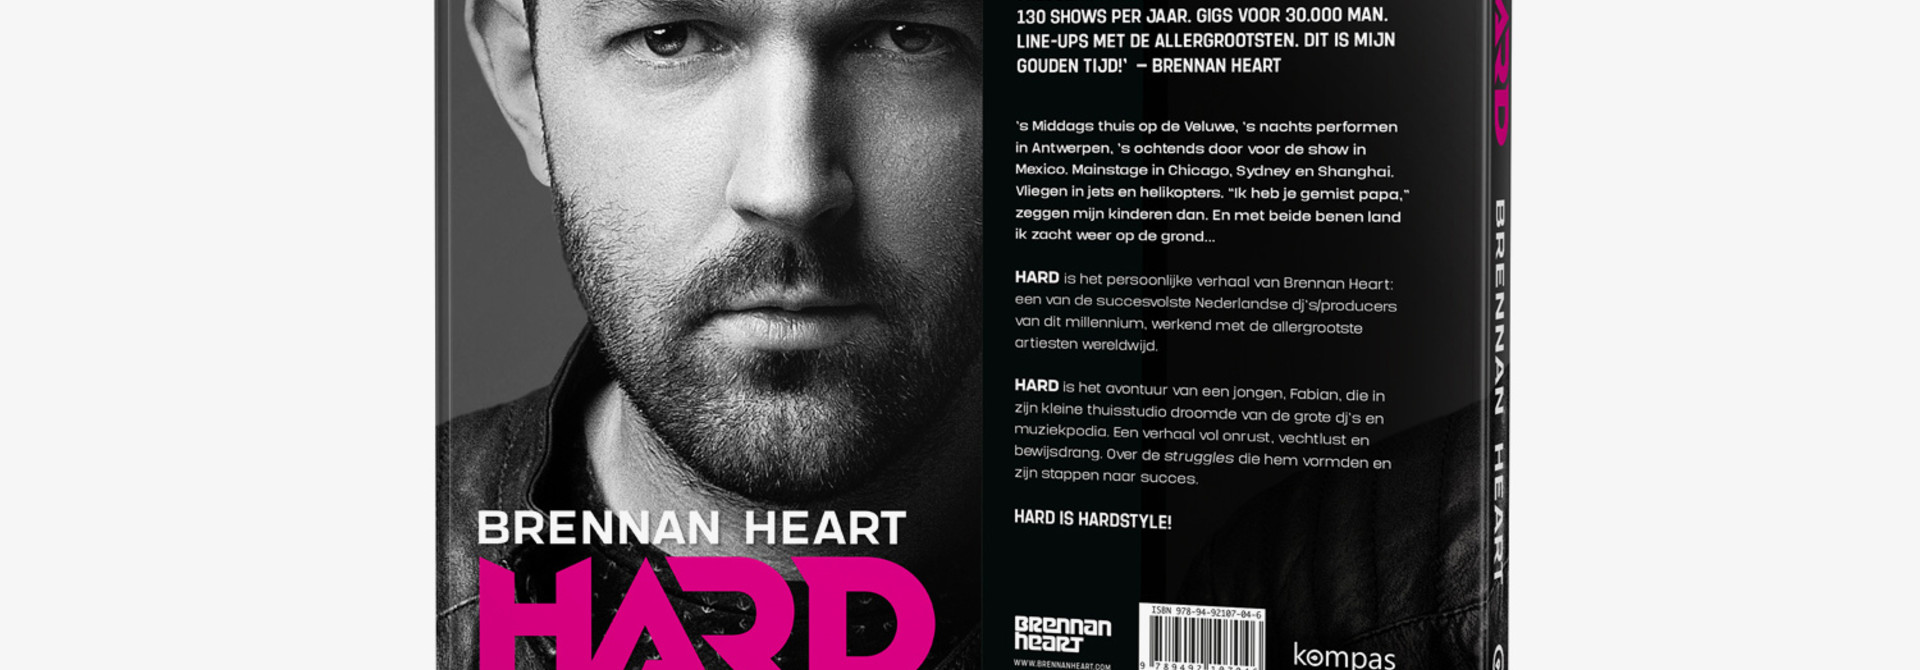 Brennan Heart "HARD" (Book) - Nederlands